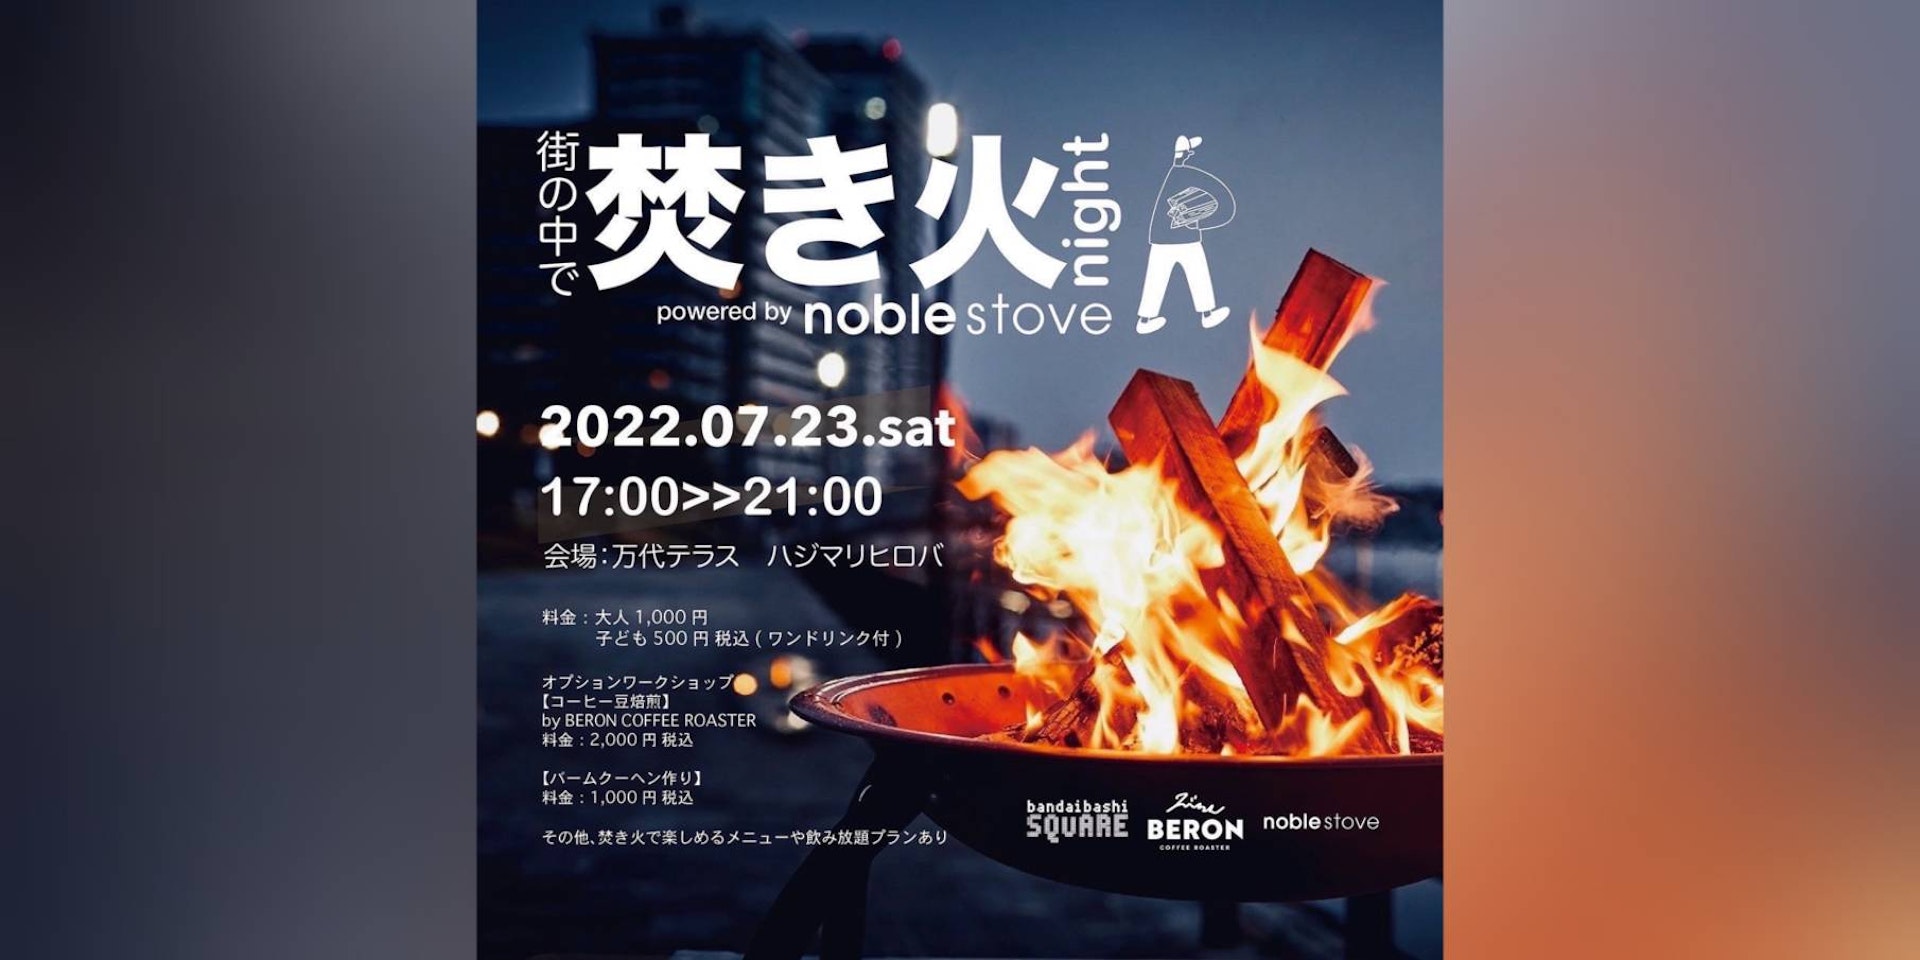 2022/07/23/sat 【焚き火Night】 powered by @noblestove_niigataのイメージ画像